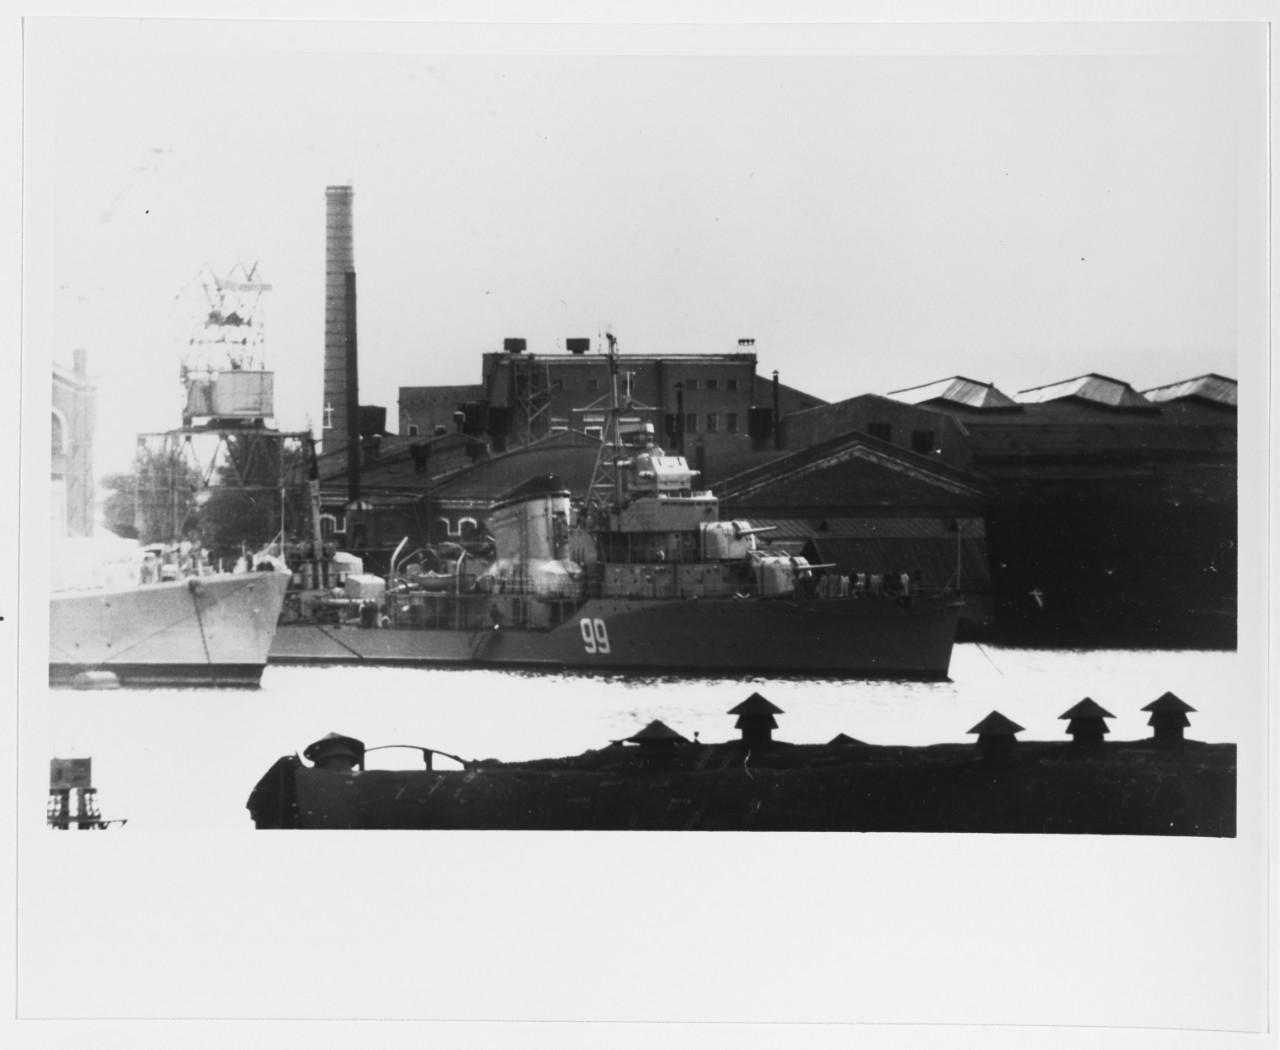 Soviet Gordyy class destroyer in the Baltic in 1956.